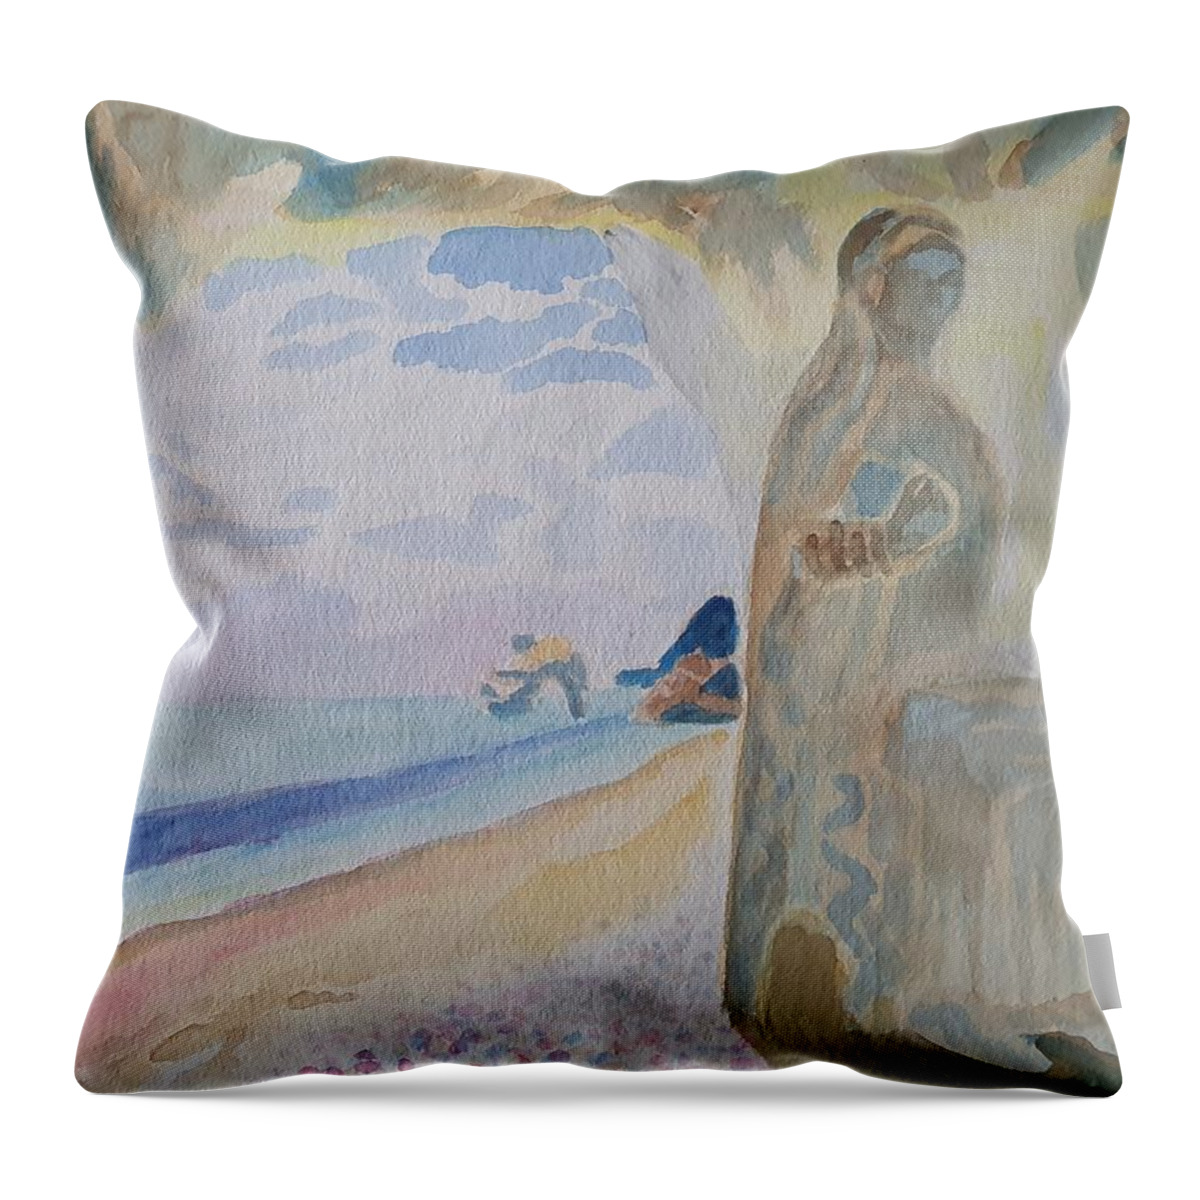 Sculpture Throw Pillow featuring the painting Mediterranean Dream Cave by Enrico Garff